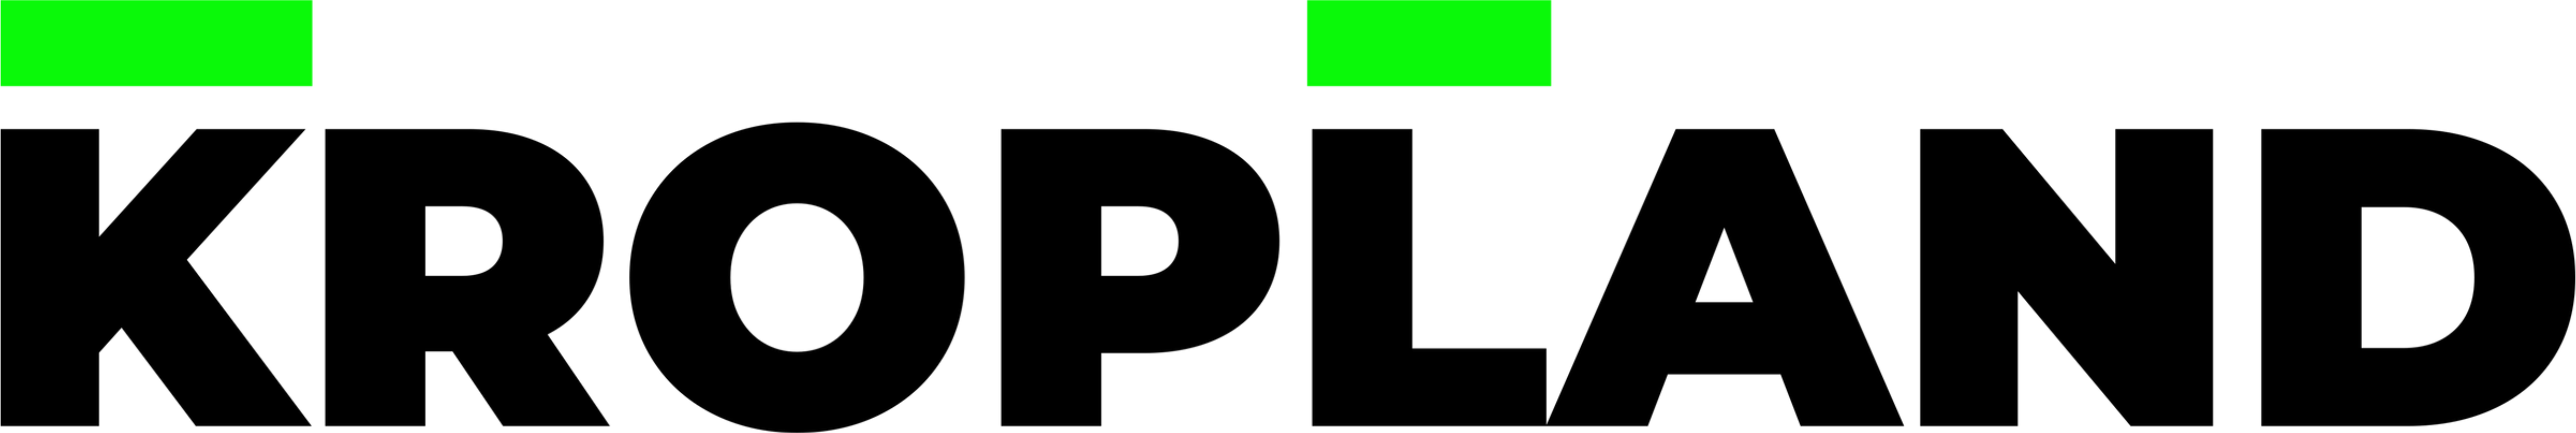 KROPLAND logo GUIA 130524